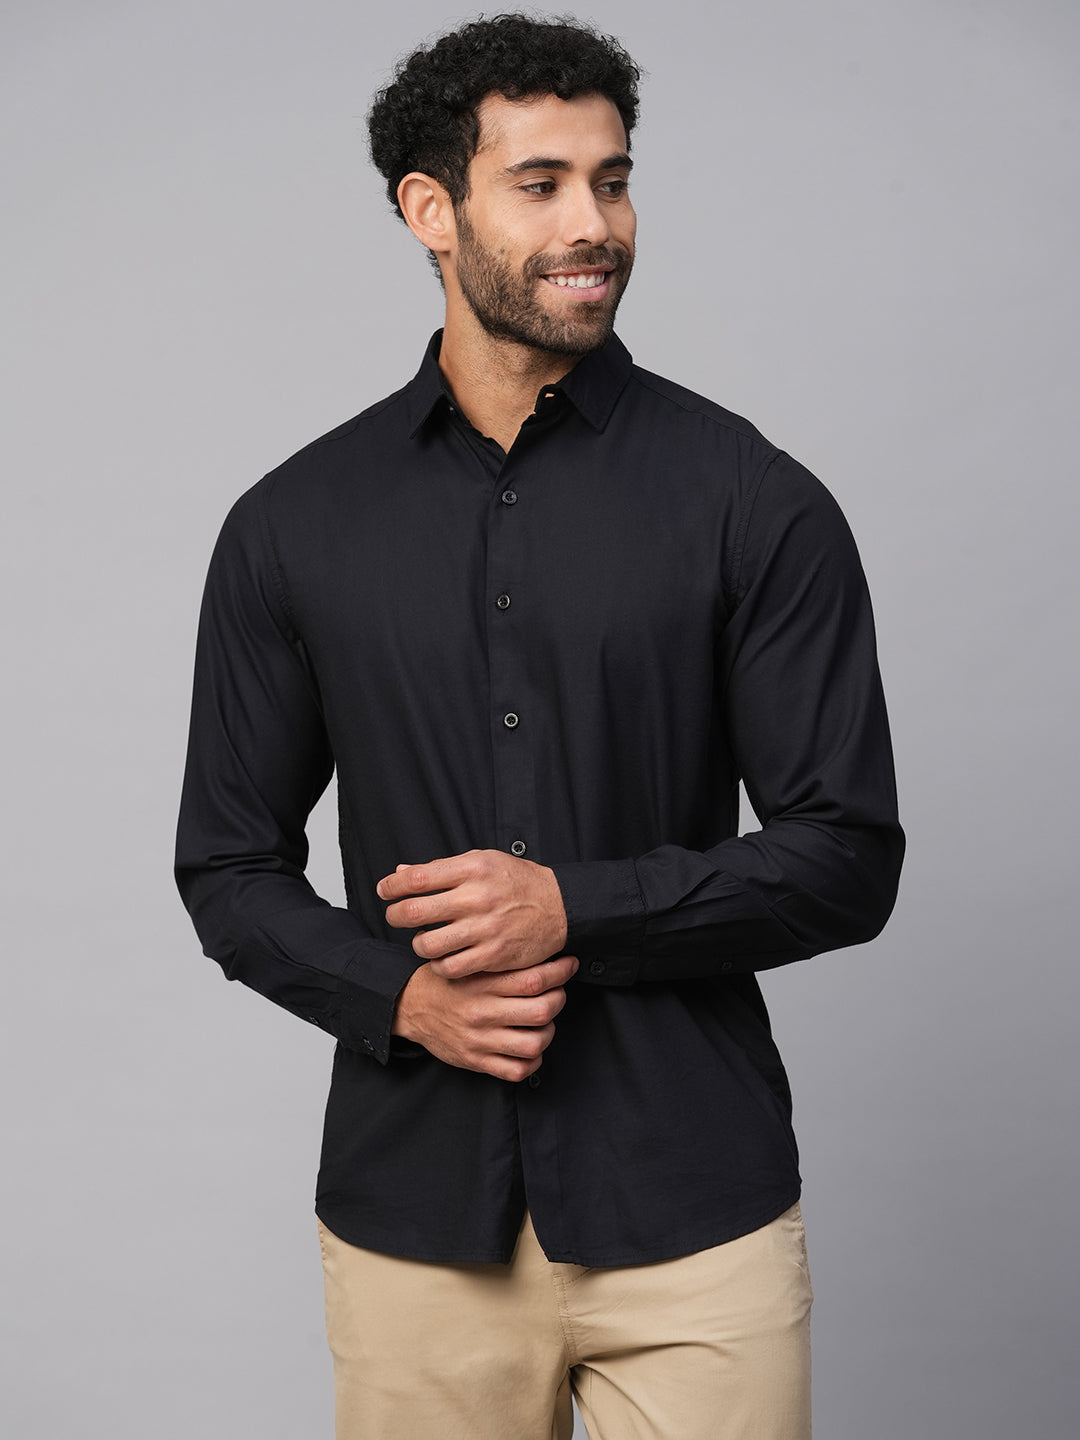 Men's Cotton Modal Black Slim Fit Shirt